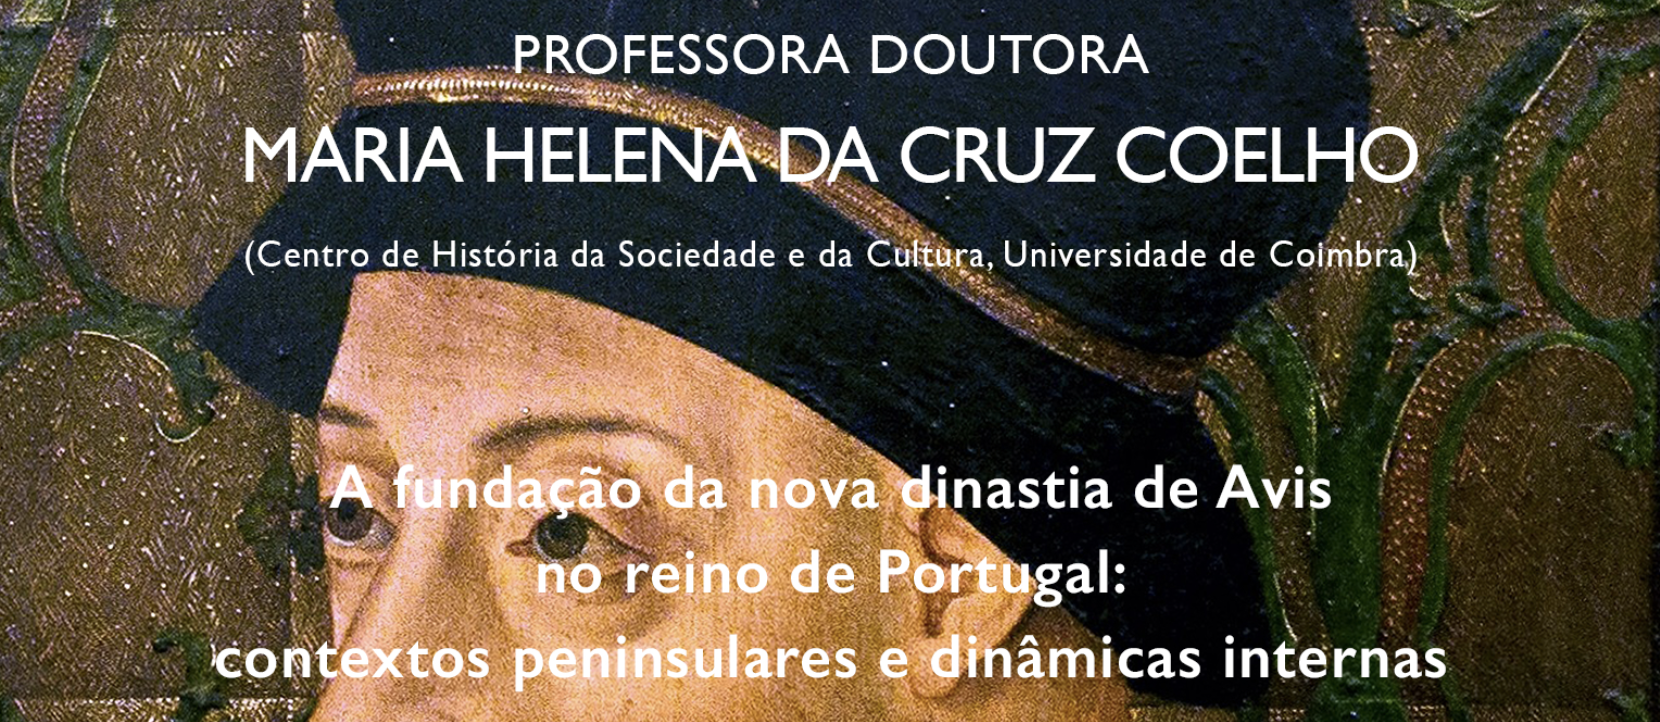 Open class with Maria Helena da Cruz Coelho